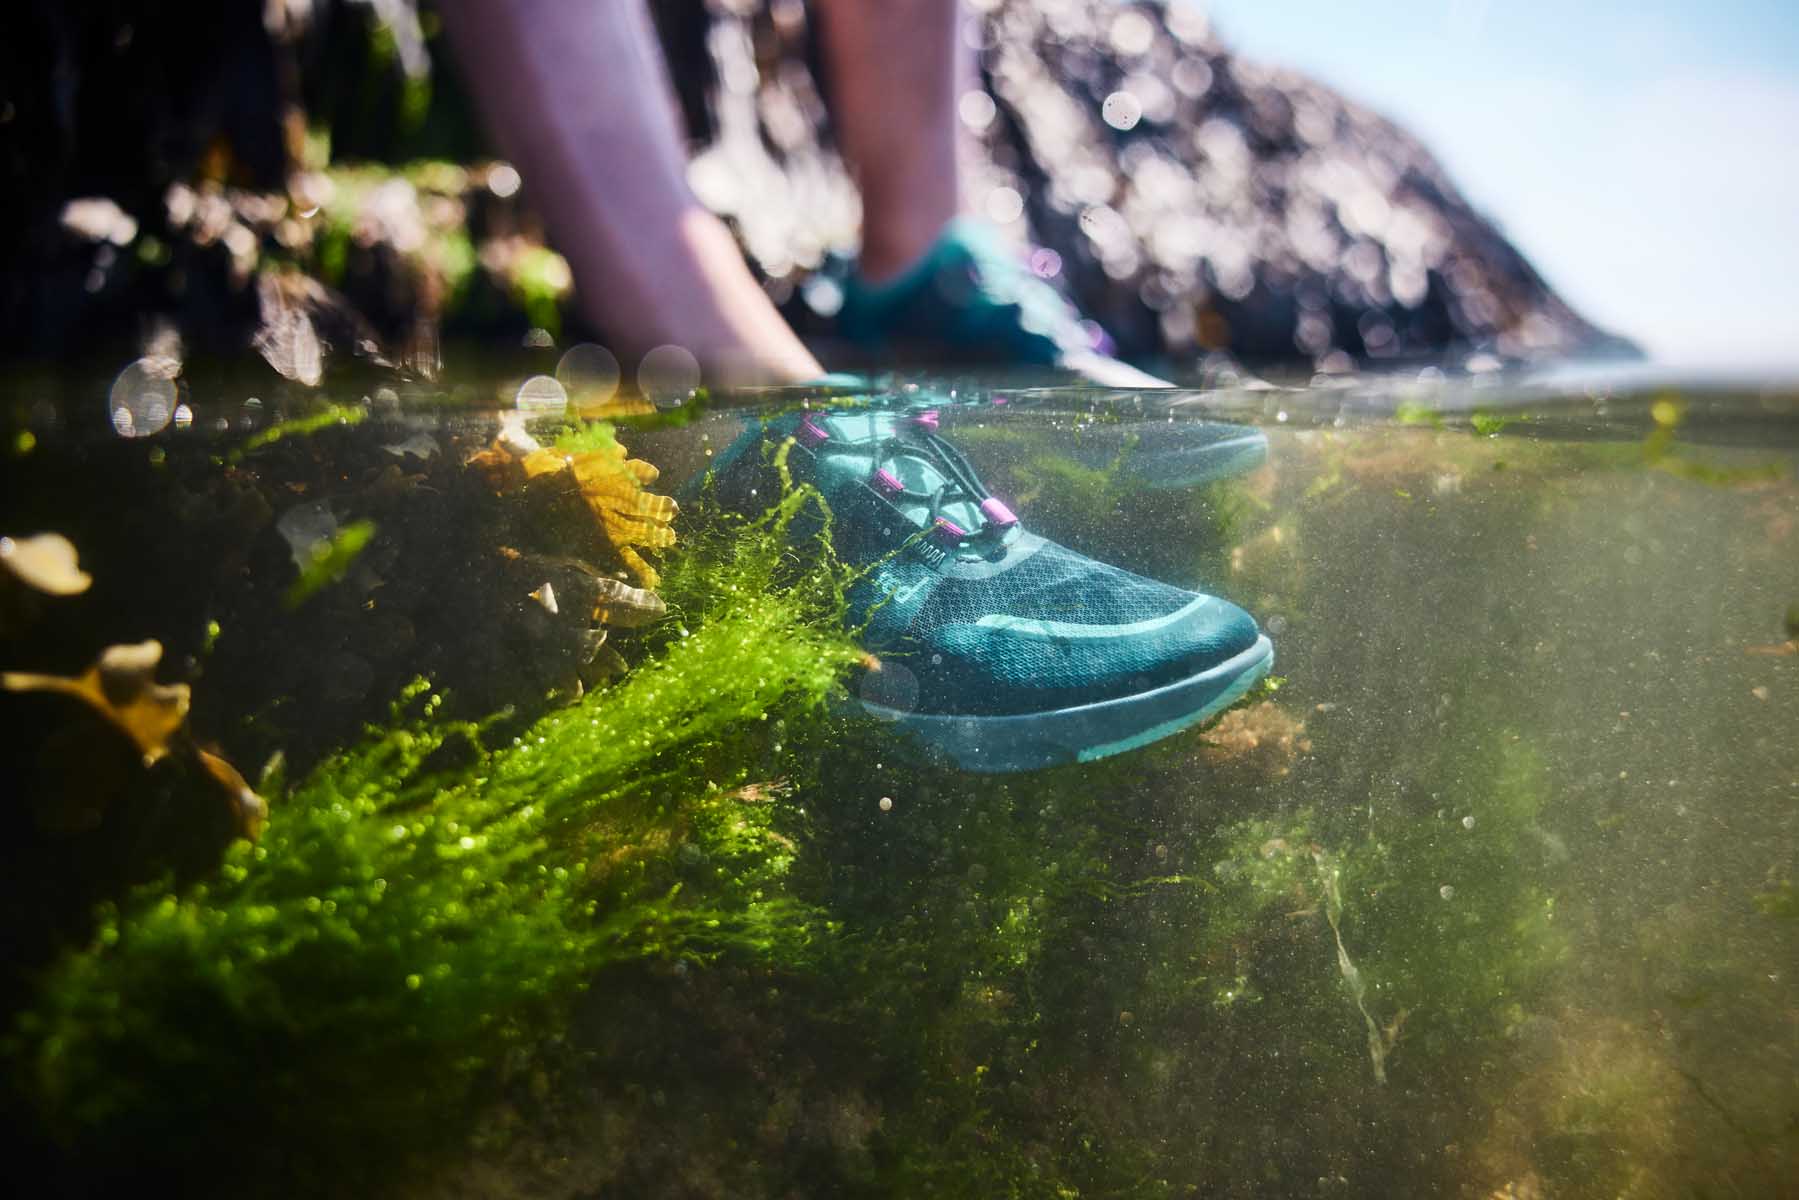 Blue aqua shoes submerged under water